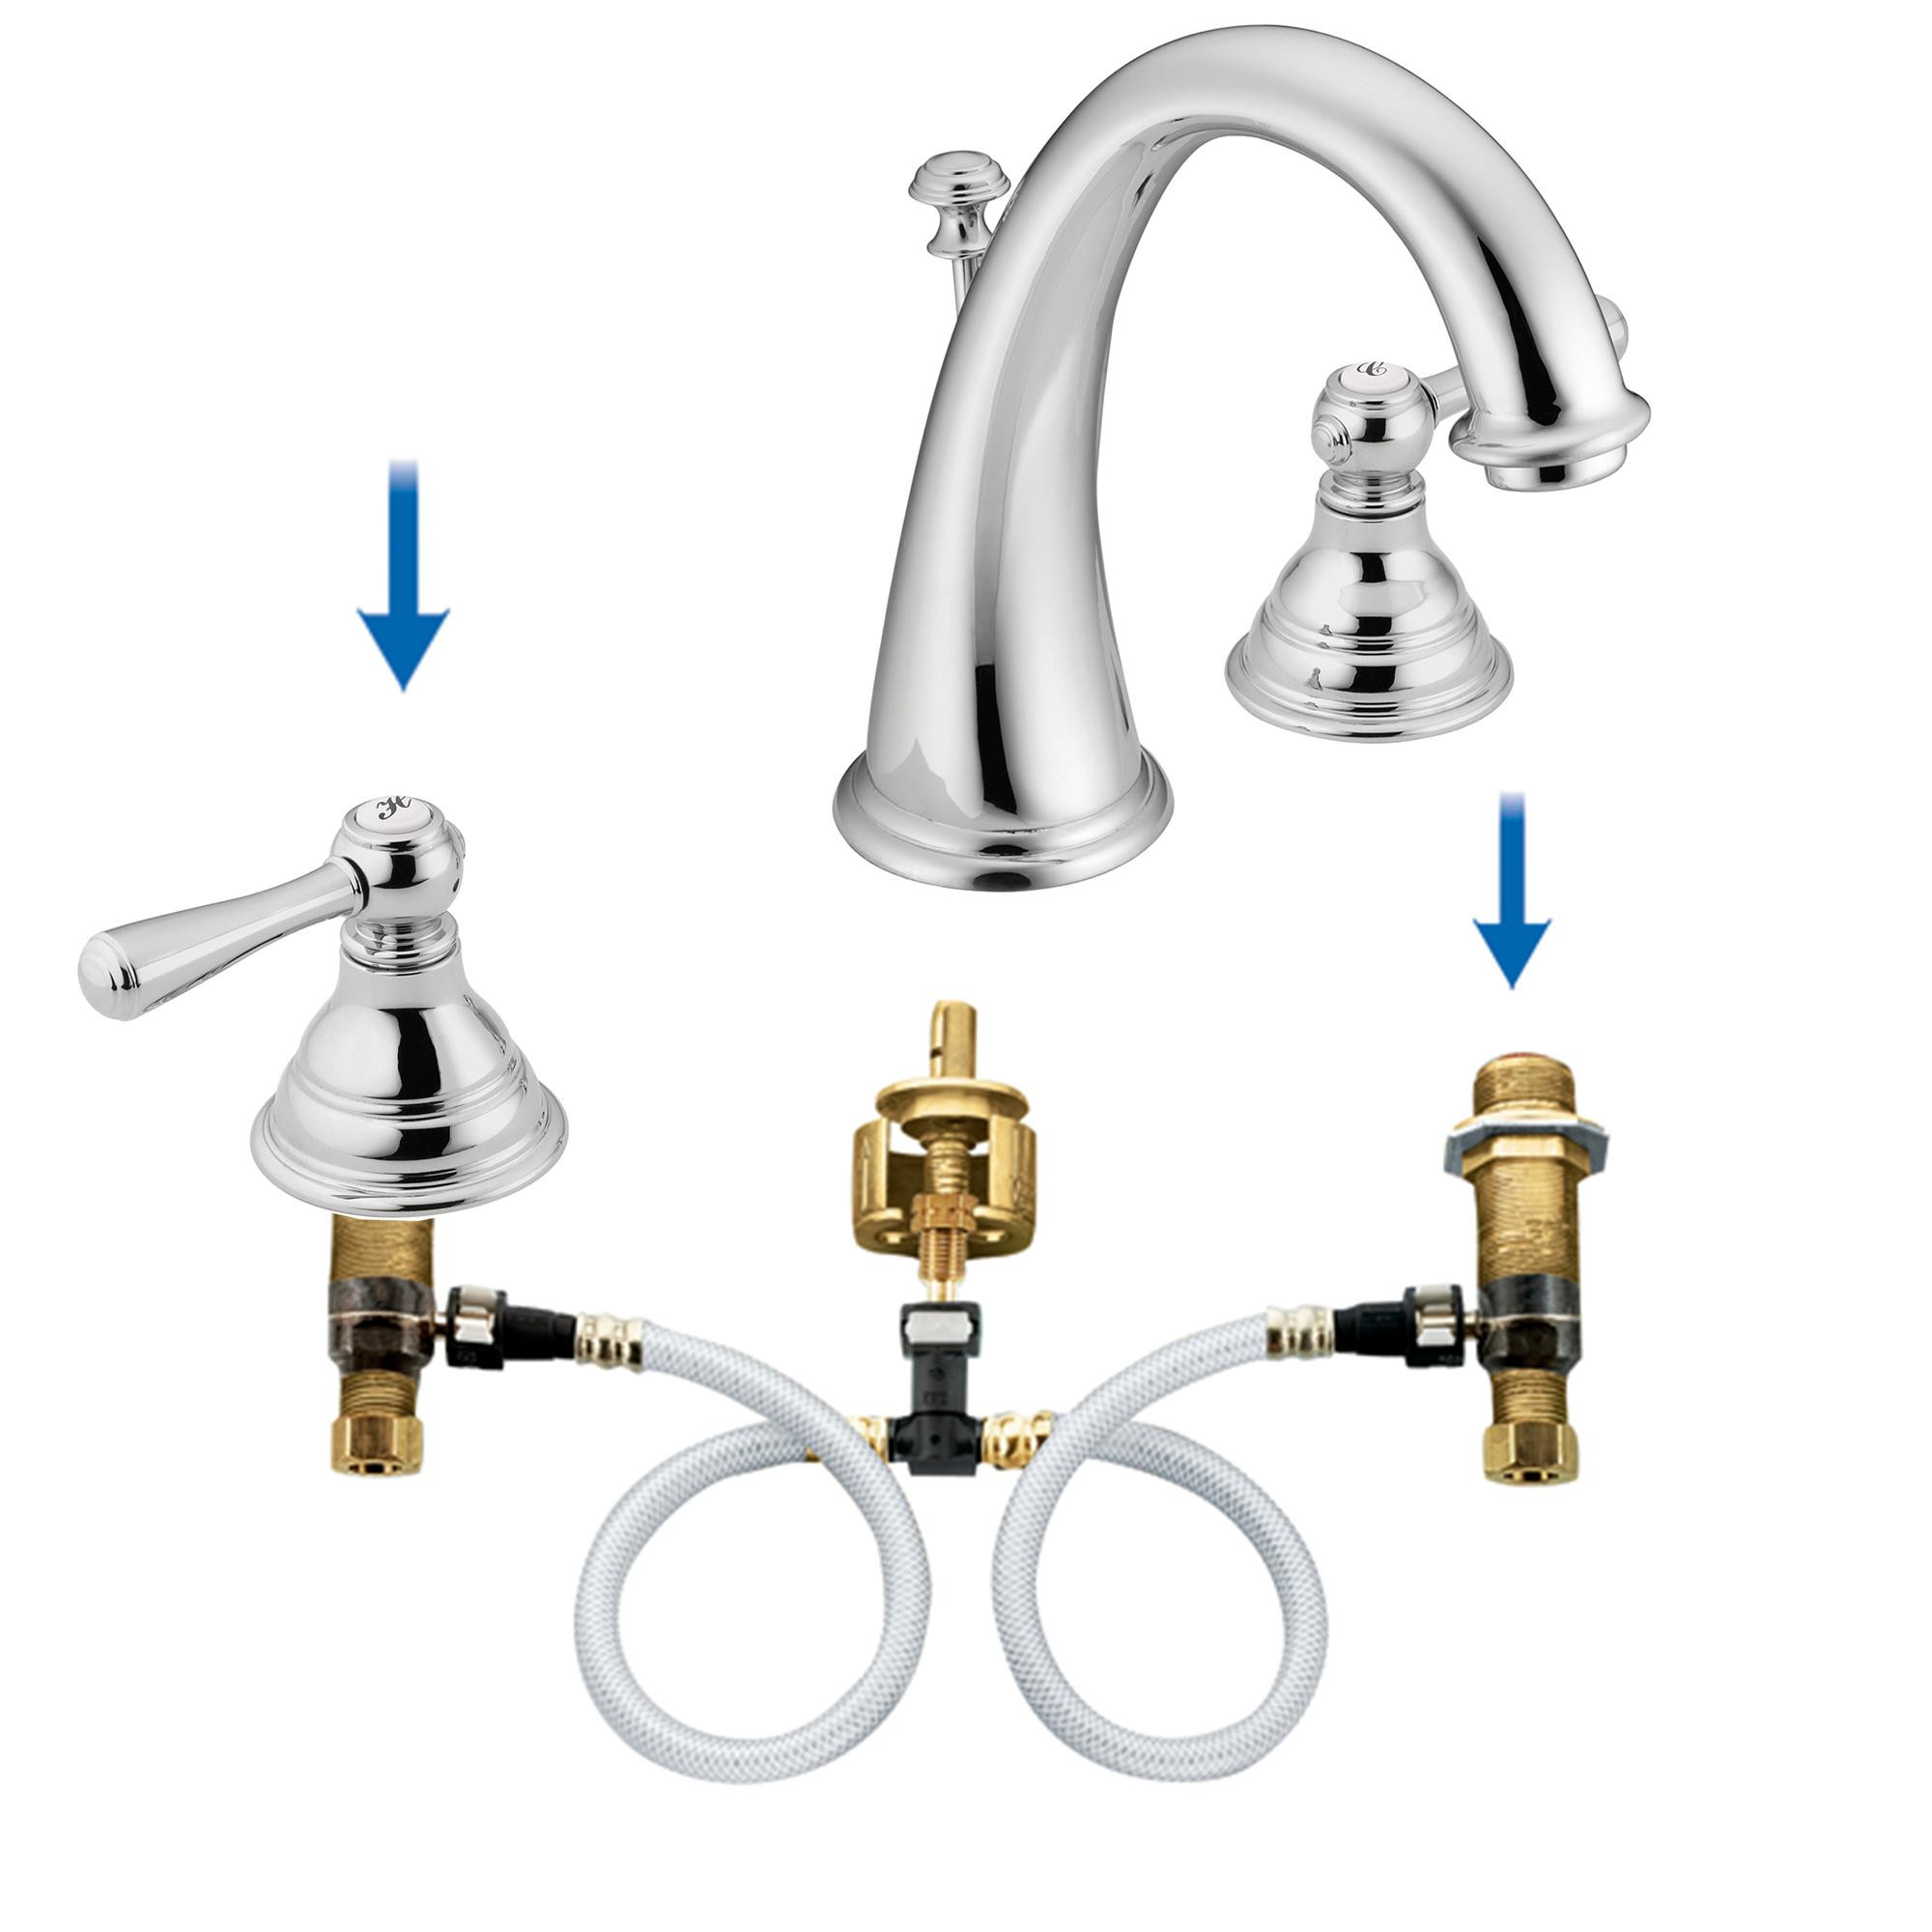 Moen Brass Bathroom Faucets
 Moen T6125P Kingsley Two Handle High Arc Widespread